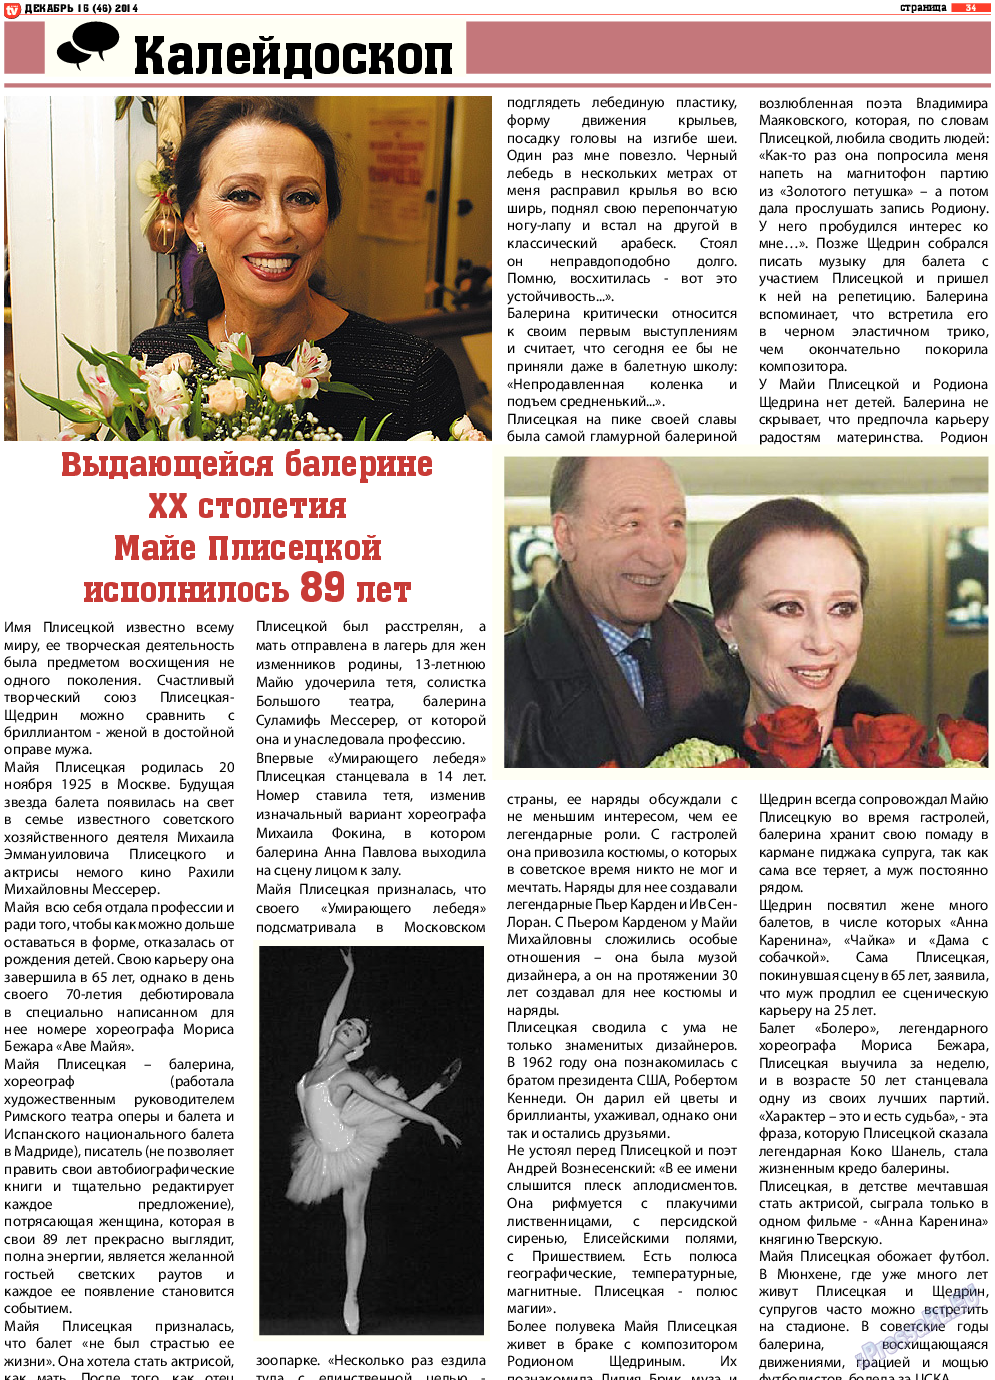 TV-бульвар, газета. 2014 №15 стр.34